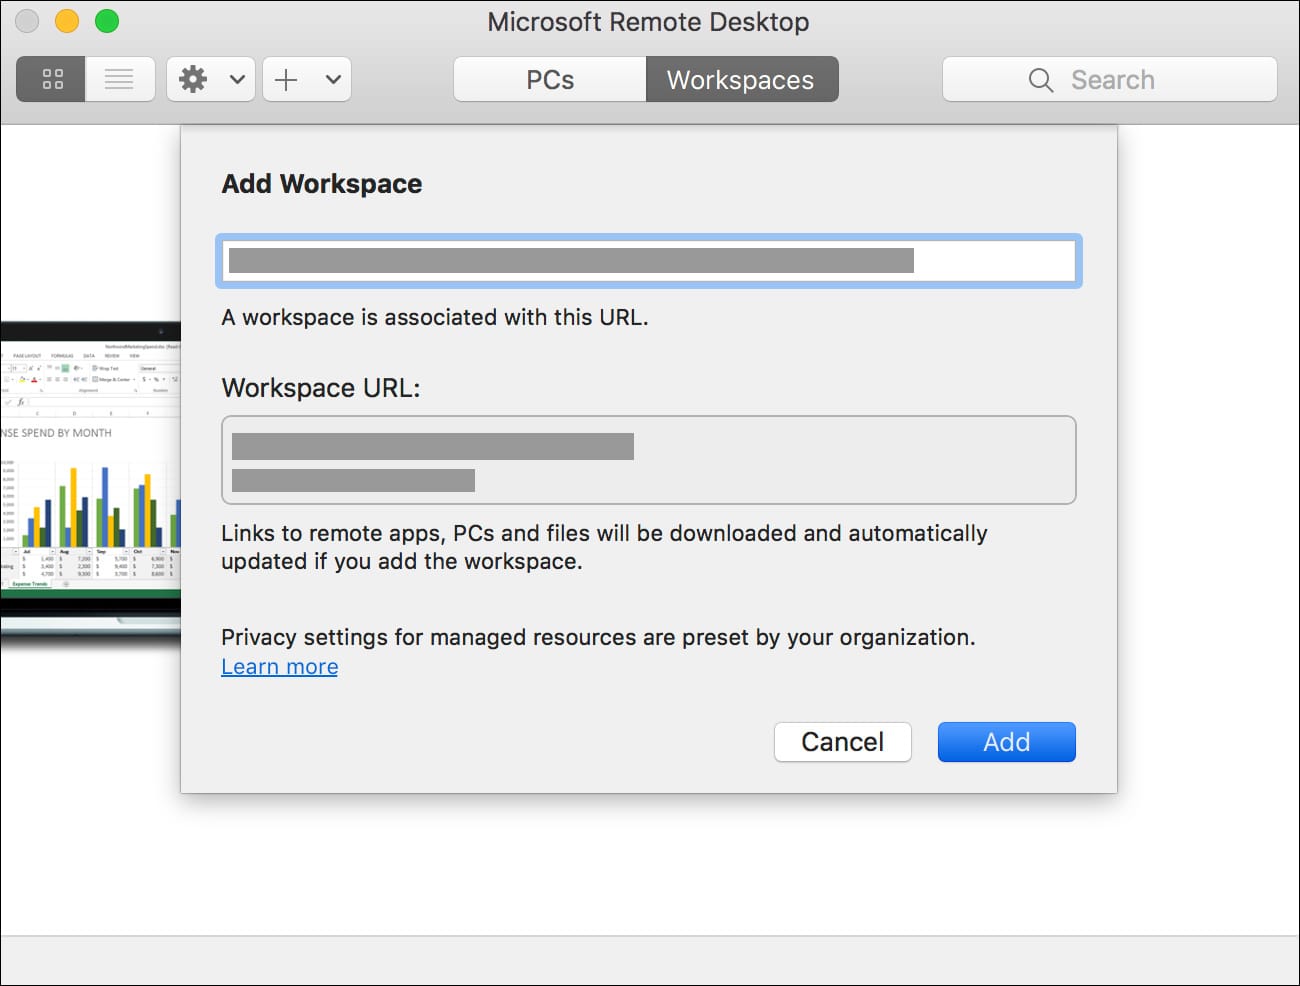 microsoft remote desktop client for mac app store